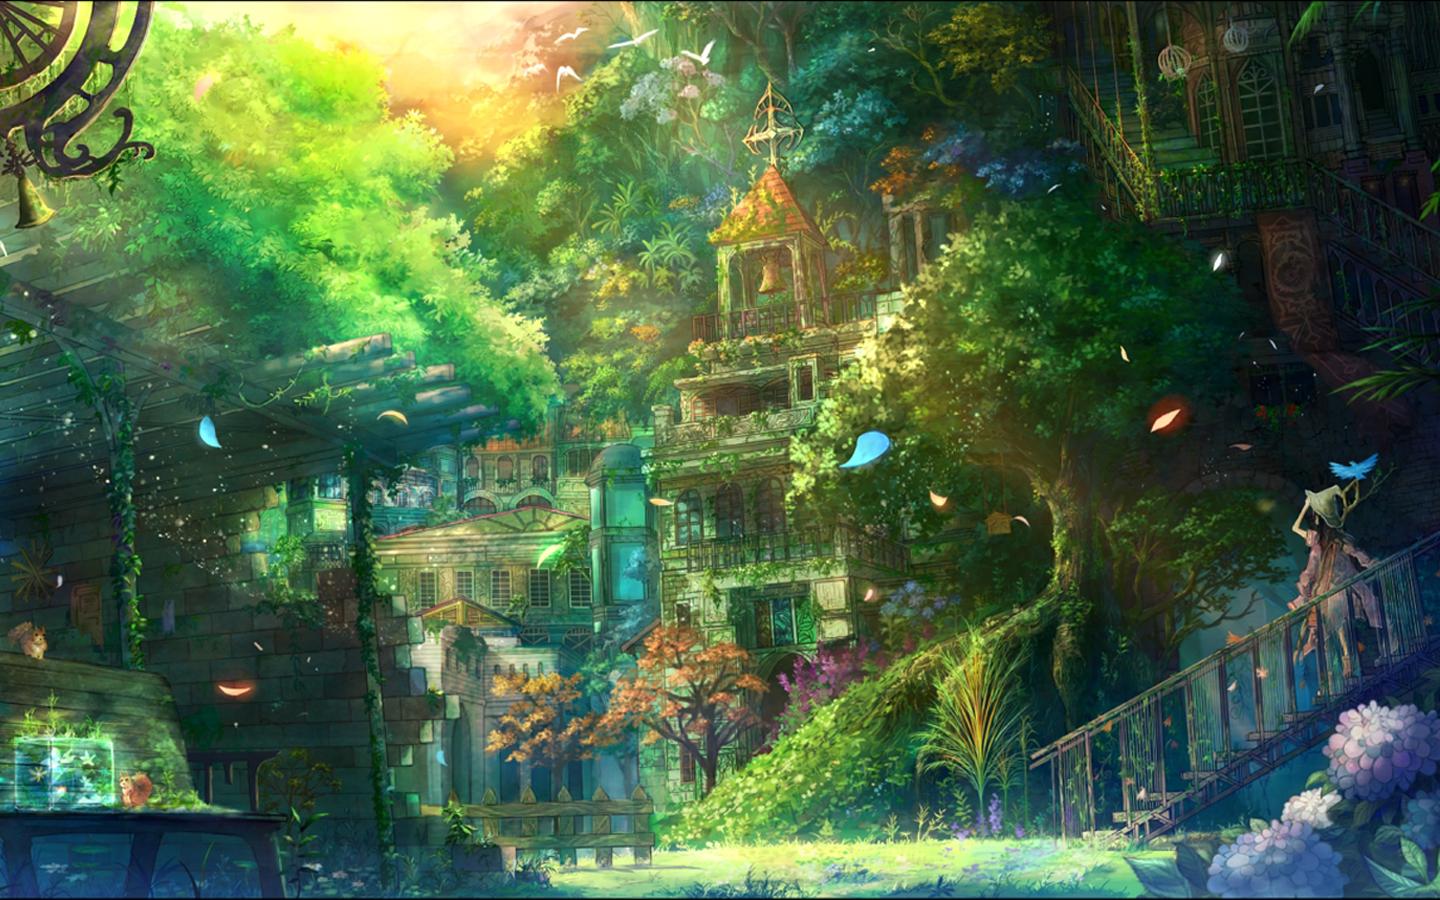 Hidden Village Of Anime